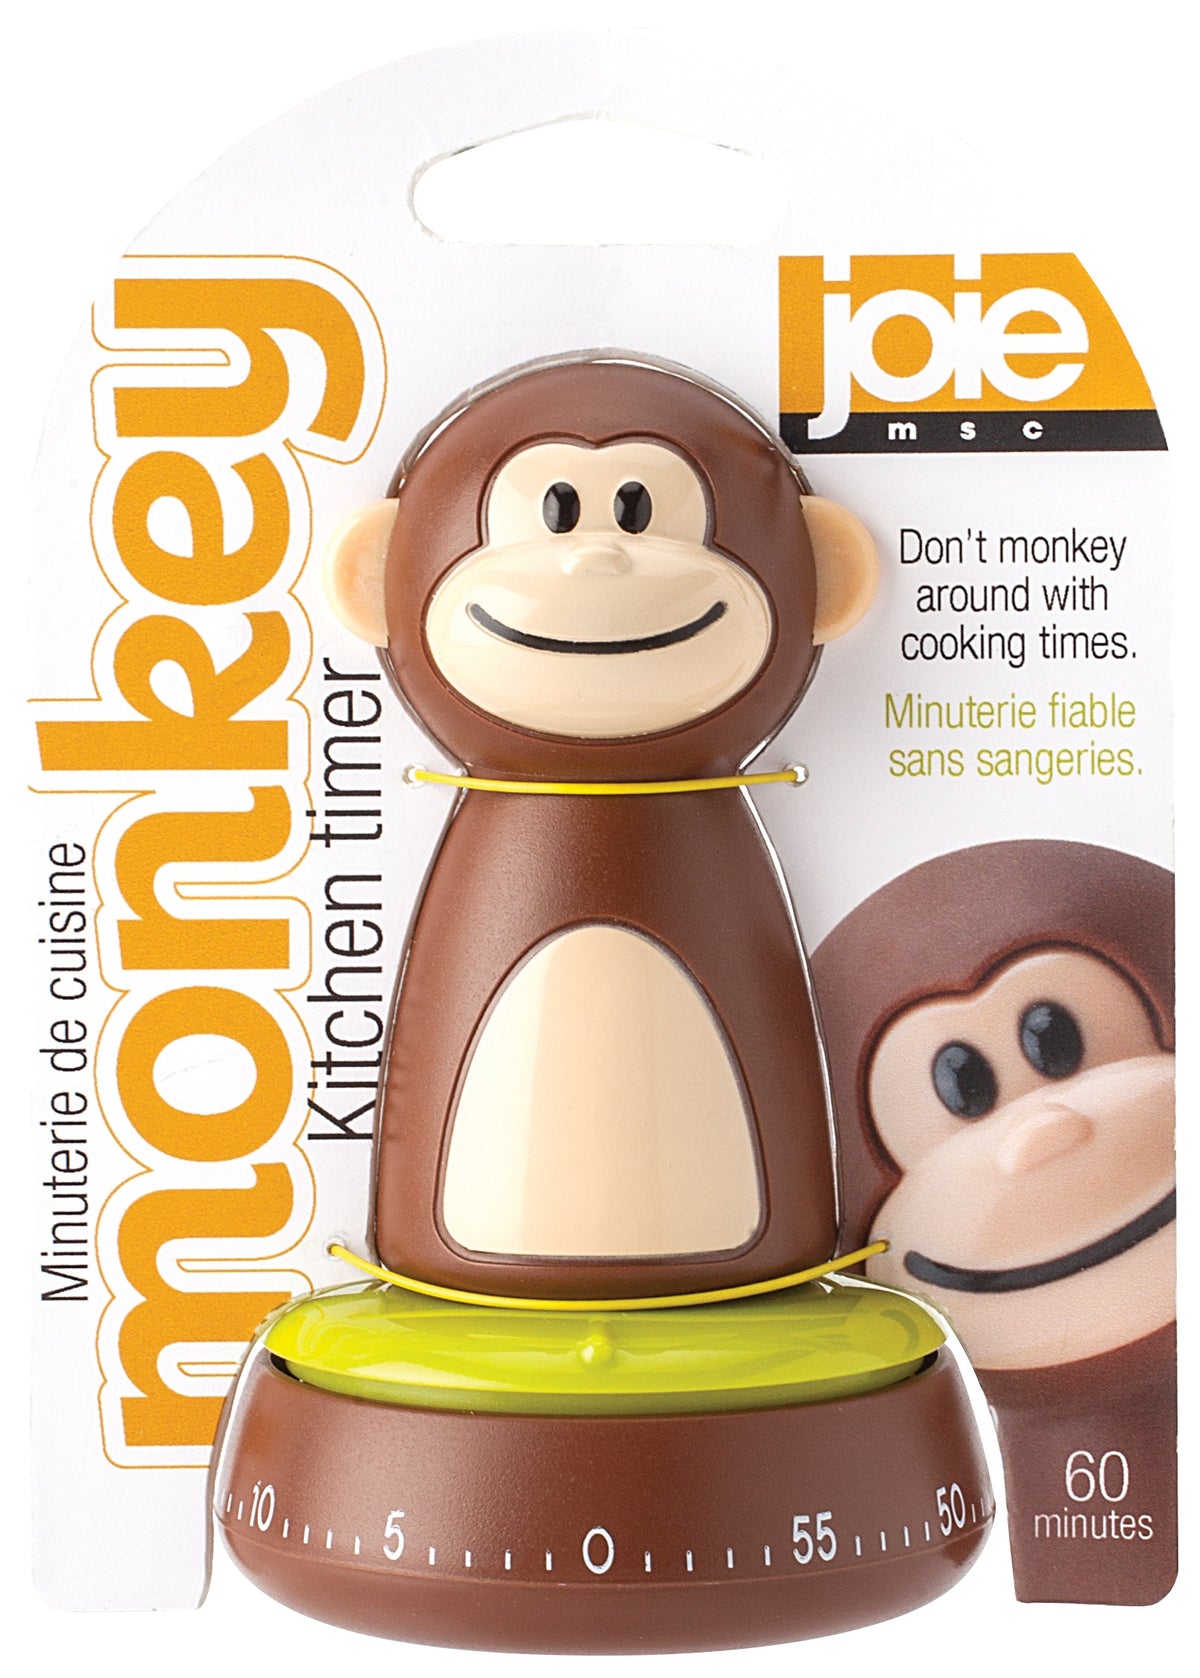 Joie MSC 77755 Monkey Kitchen Timer, Plastic/Stainless Steel